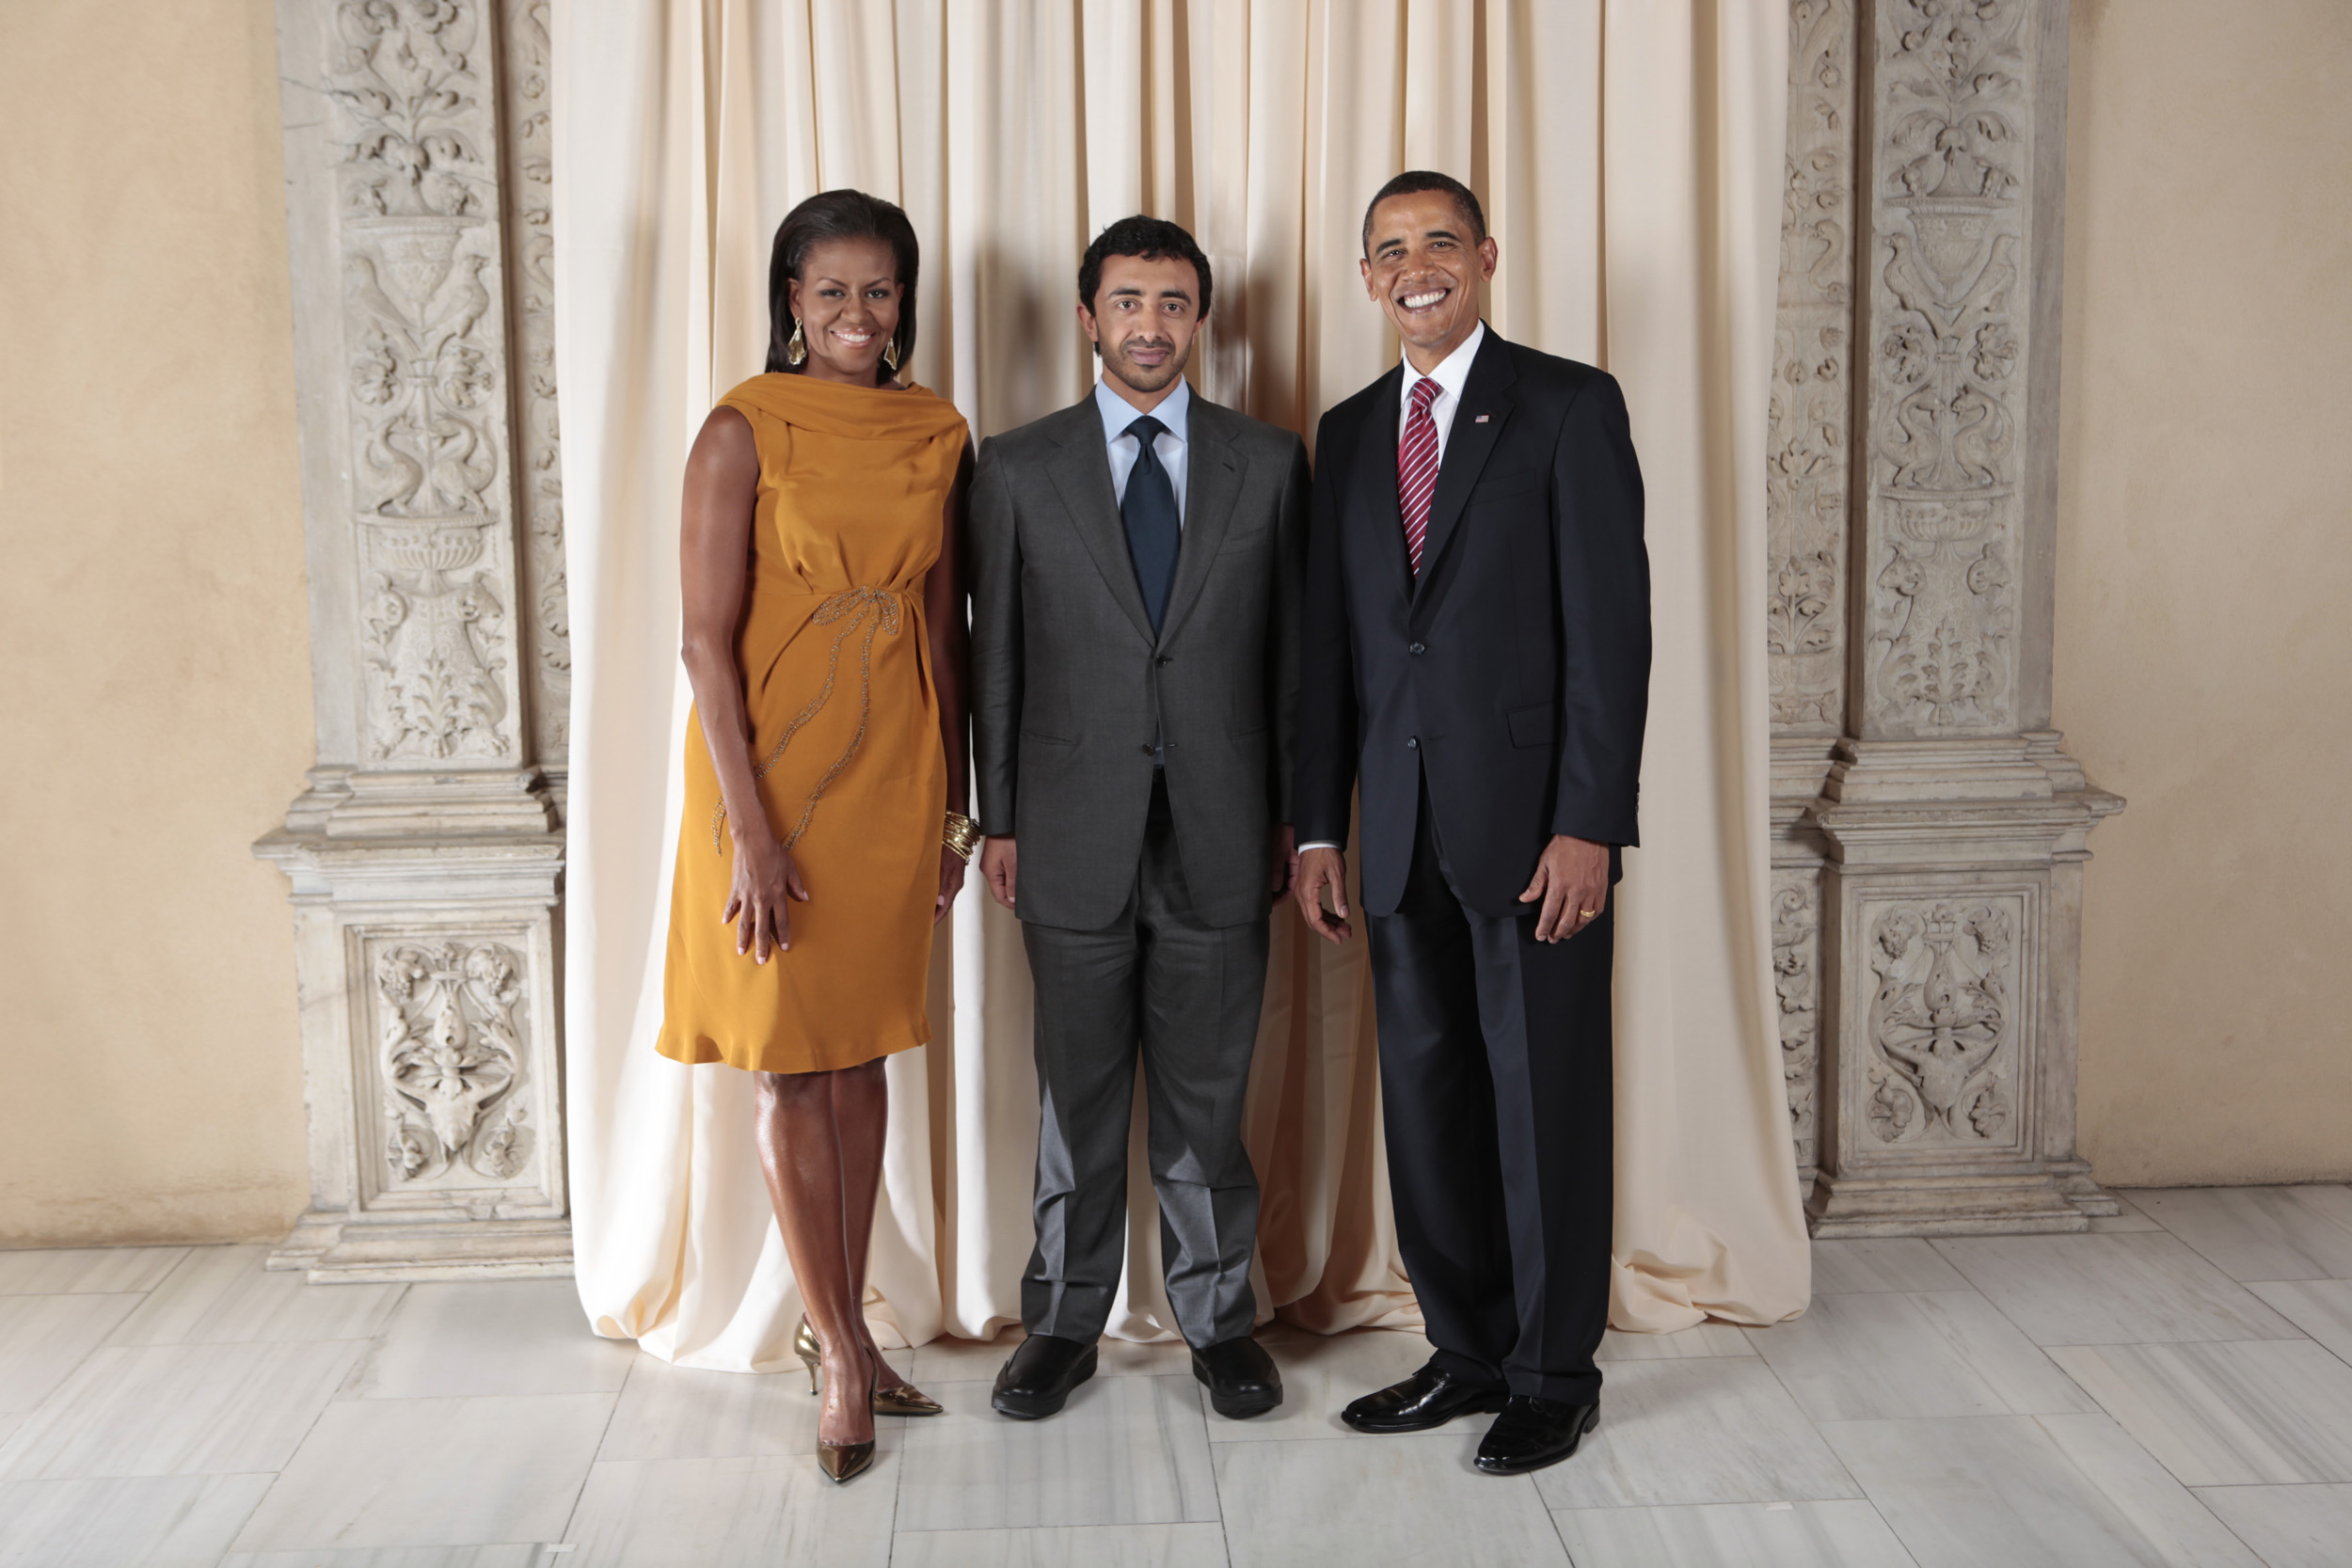 Abdullah bin Zayed Al Nahyan with Obamas